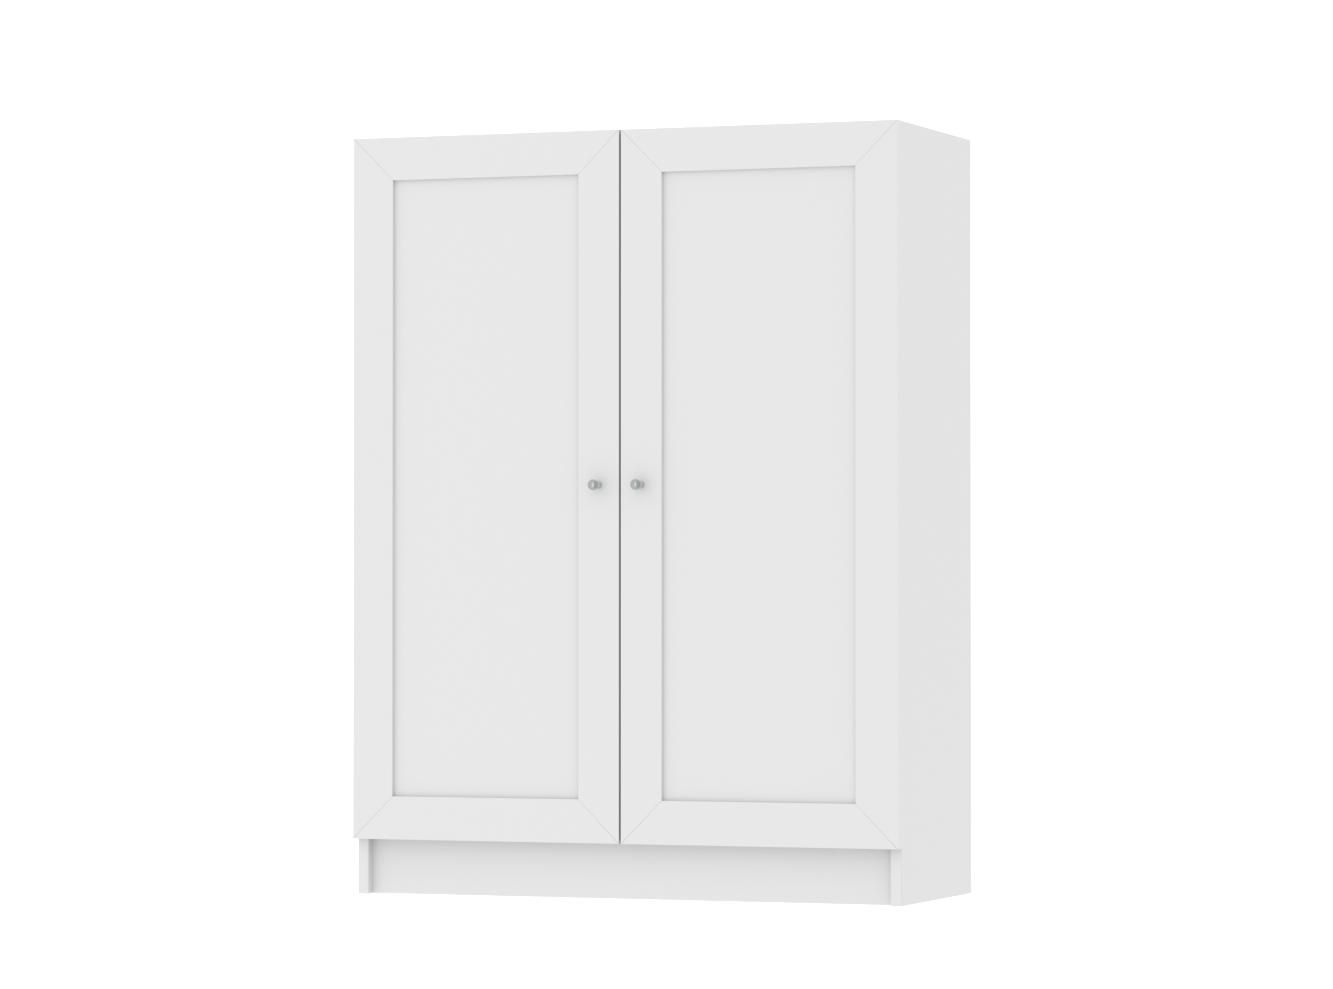 Изображение товара Комод Билли 213 white ИКЕА (IKEA), 80x30x106 см на сайте adeta.ru